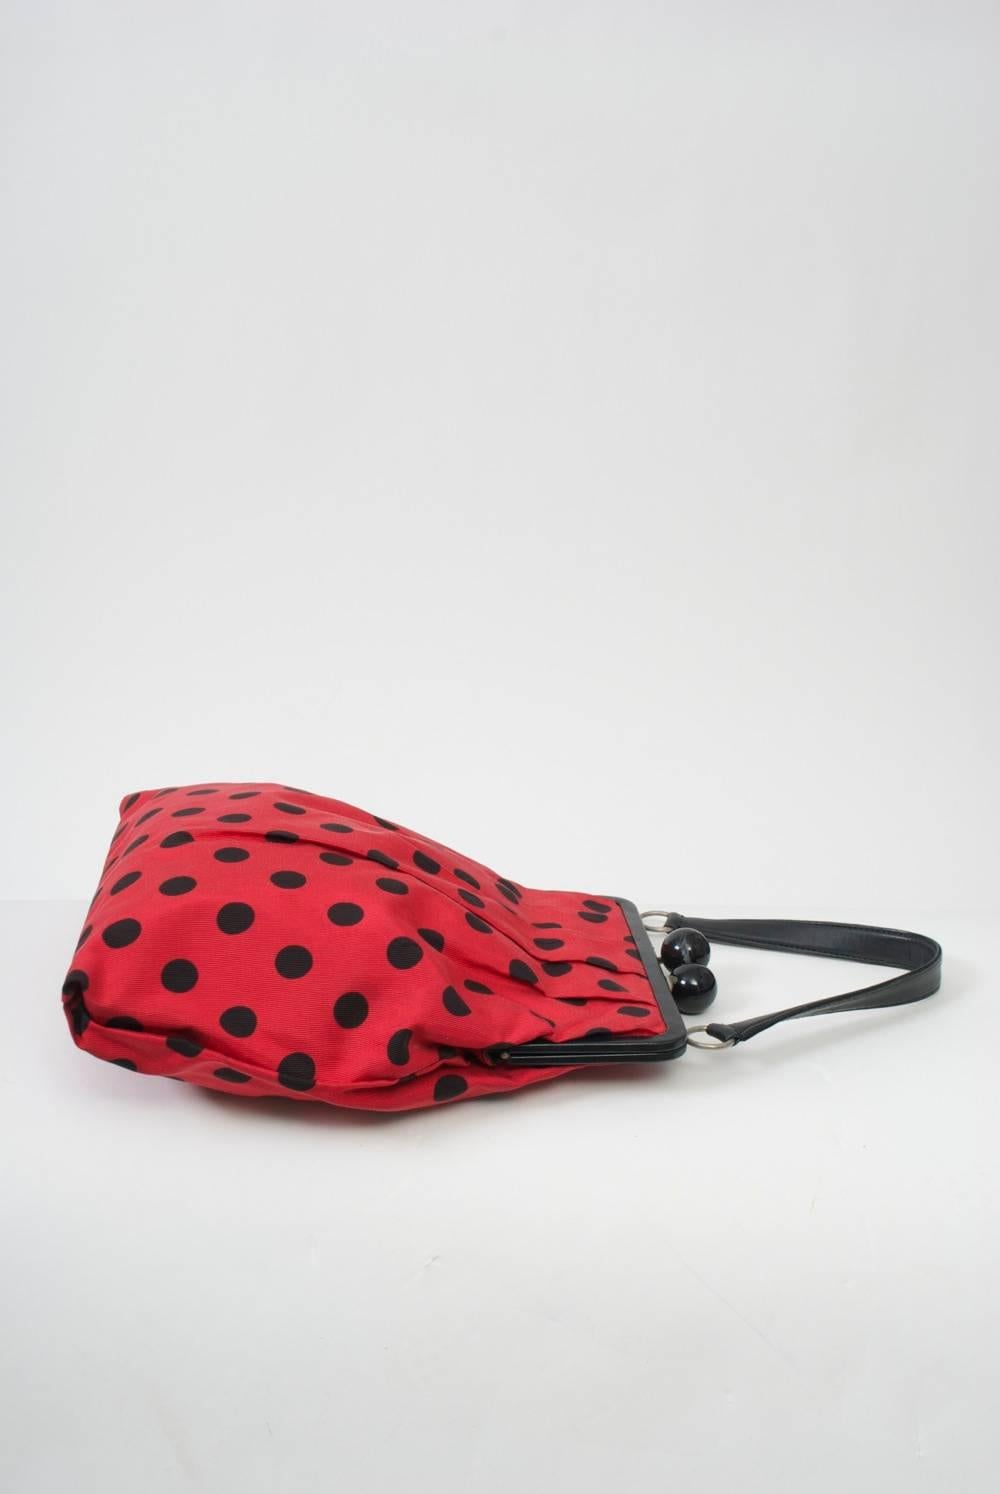 black and white polka dot handbag